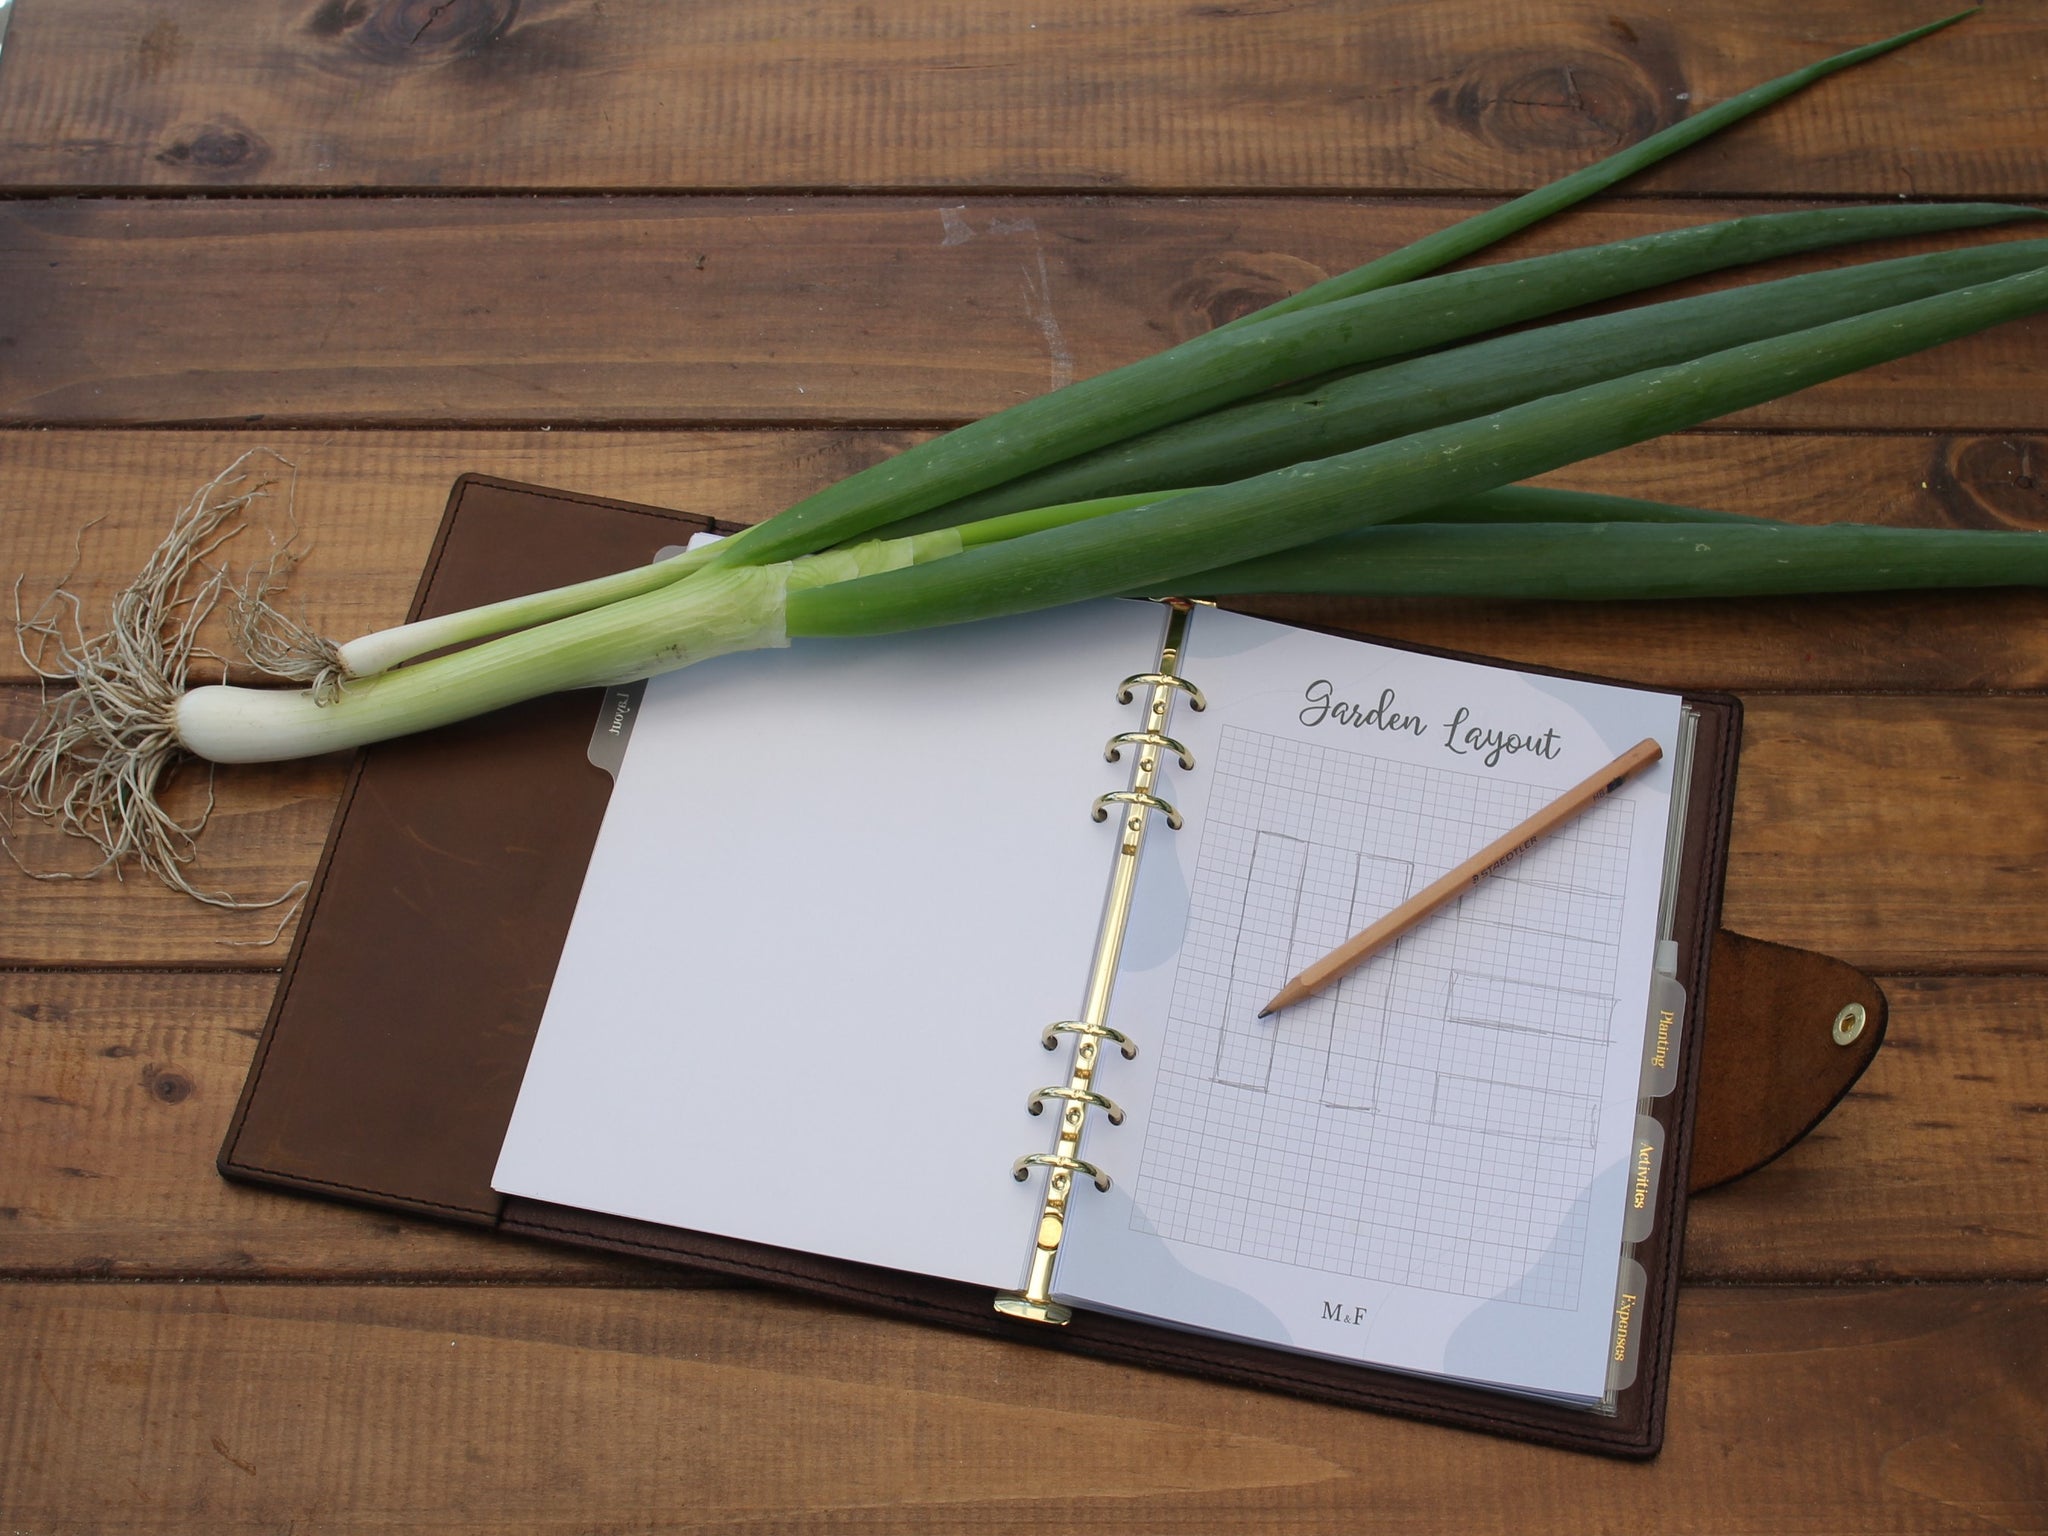 Unlined Notebook in Garden Pattern | Flourish Market